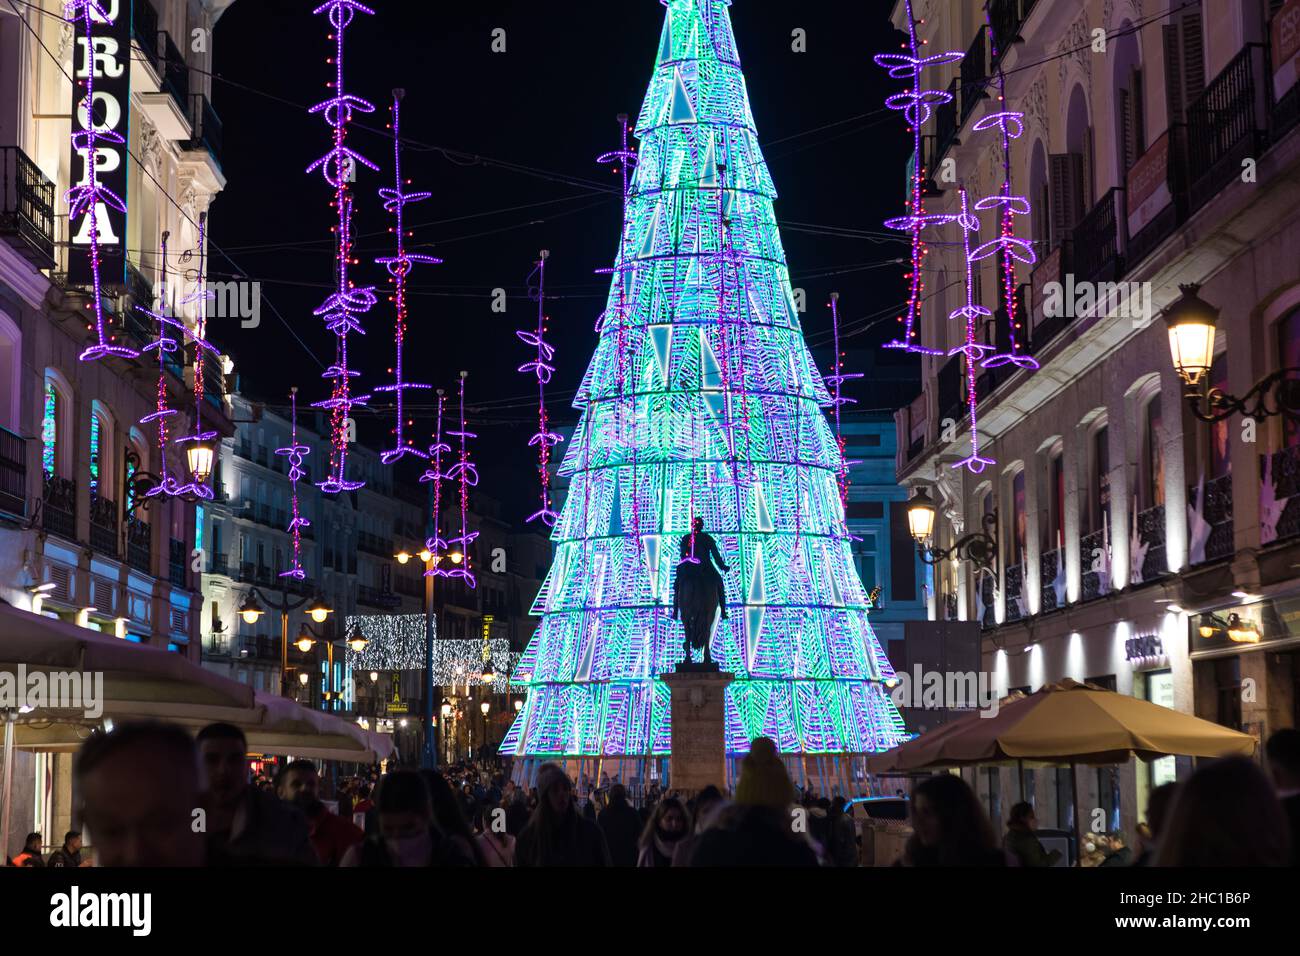 Madrid, Spain - December 13, 2021: Christmas lights shine on El Carmen street n Madrid, Spain. Stock Photo